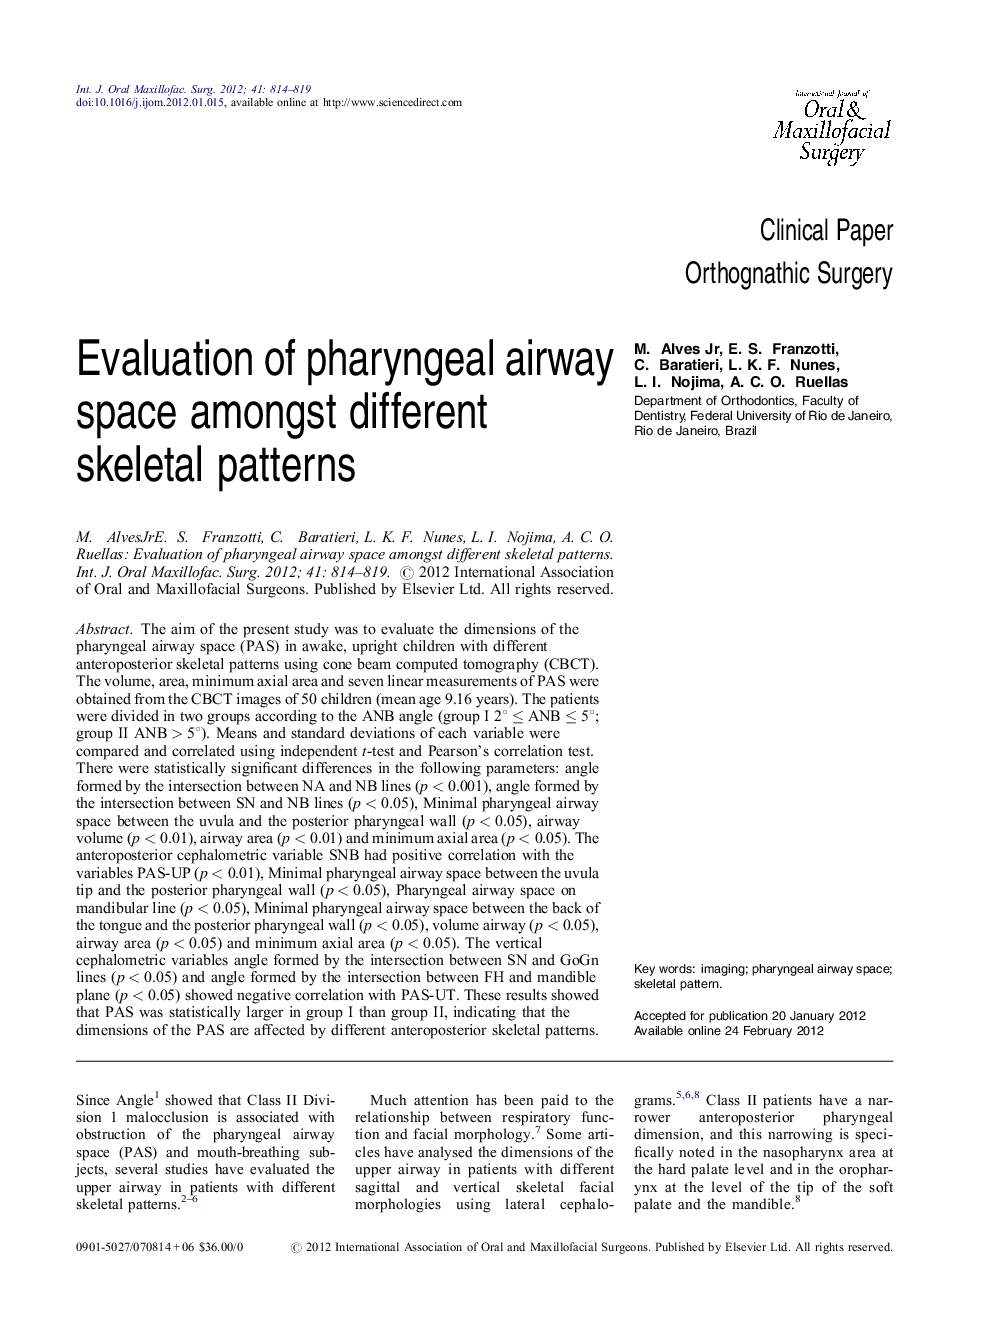 Evaluation of pharyngeal airway space amongst different skeletal patterns